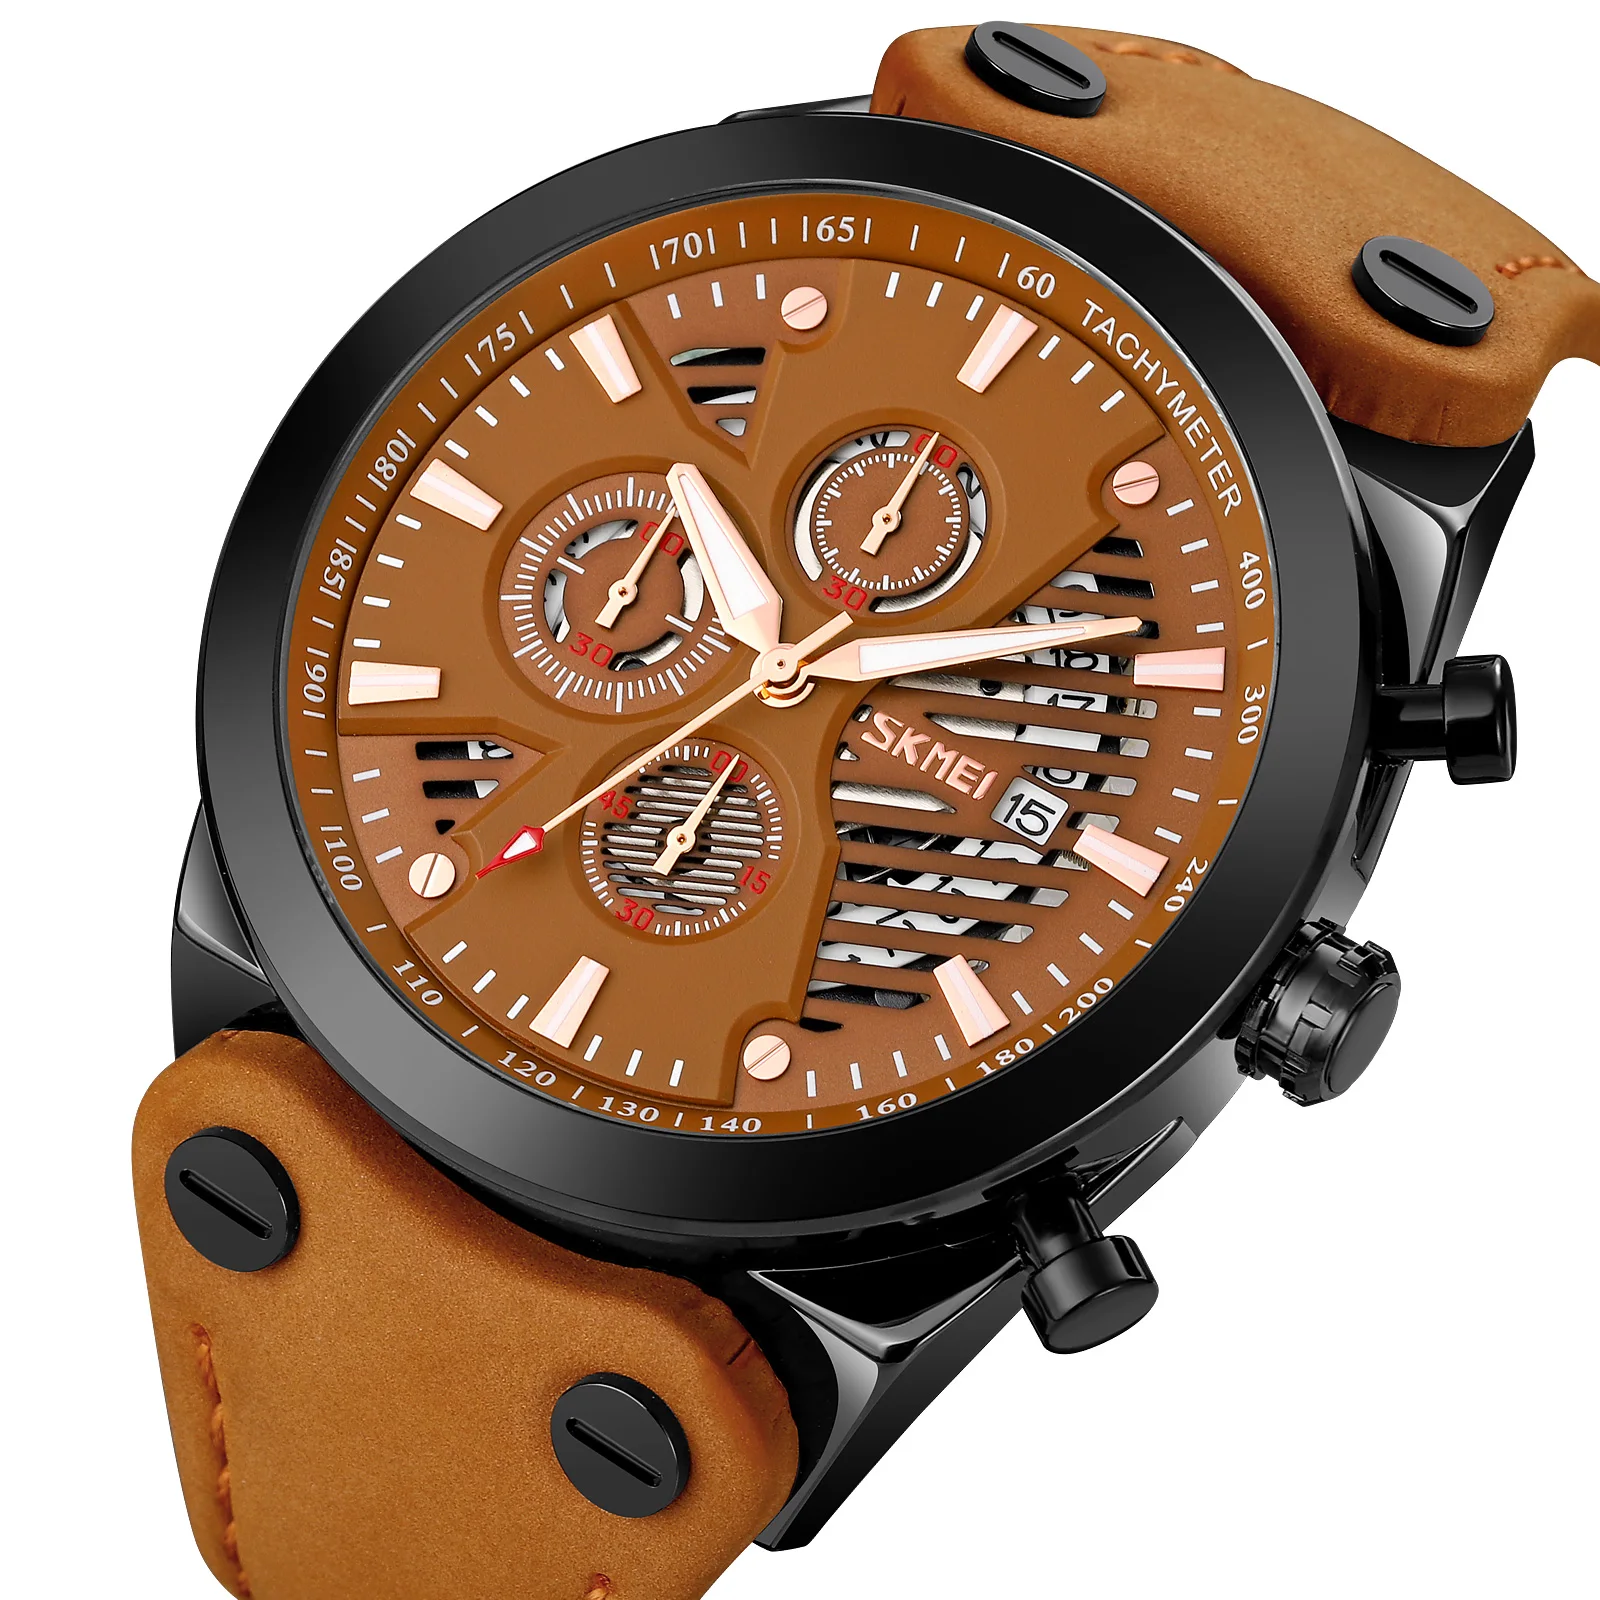 

SKMEI Fashion Sports Watch Luxury Four-Display Large Dial Stopwatch Chronograph Date Waterproof Trend Men's Reloj de cuarzo 9282